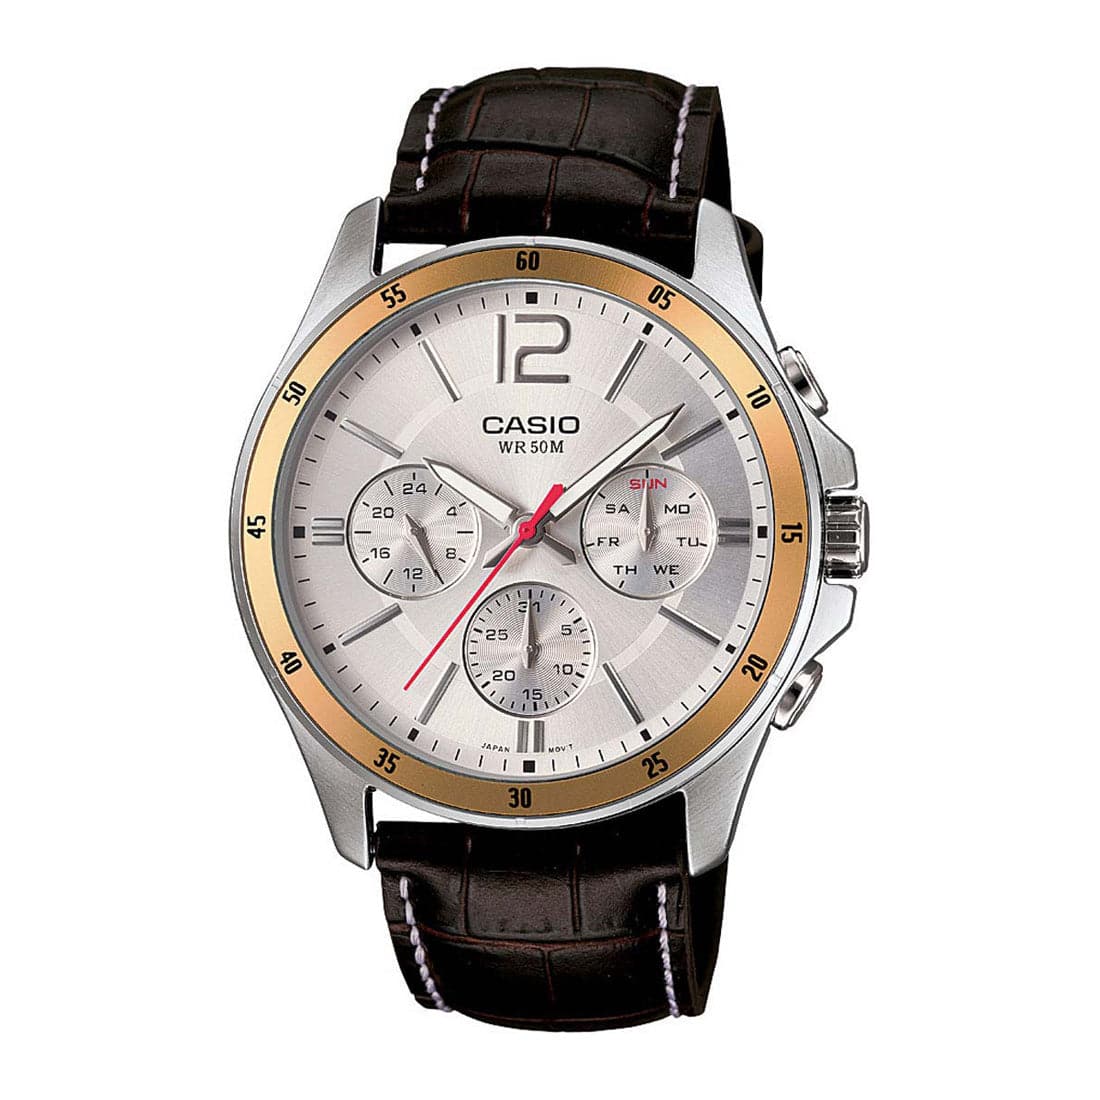 A835 MTP-1374L-7AVDF - Kamal Watch Company